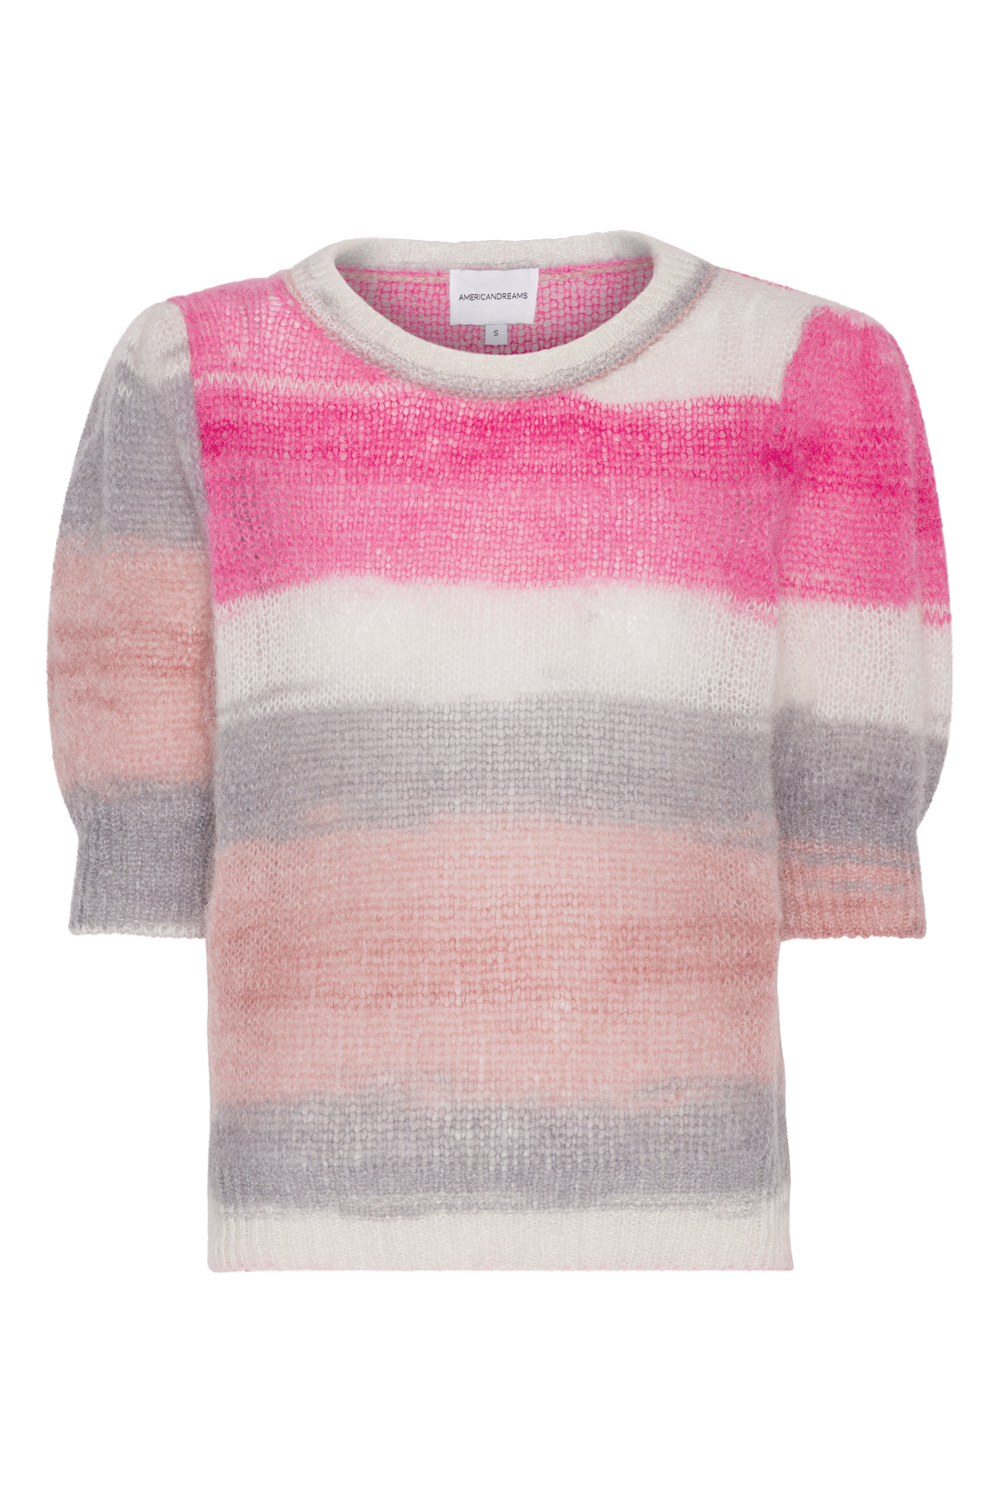 Kenza Short Sleeve Knit Pullover Pink Dream